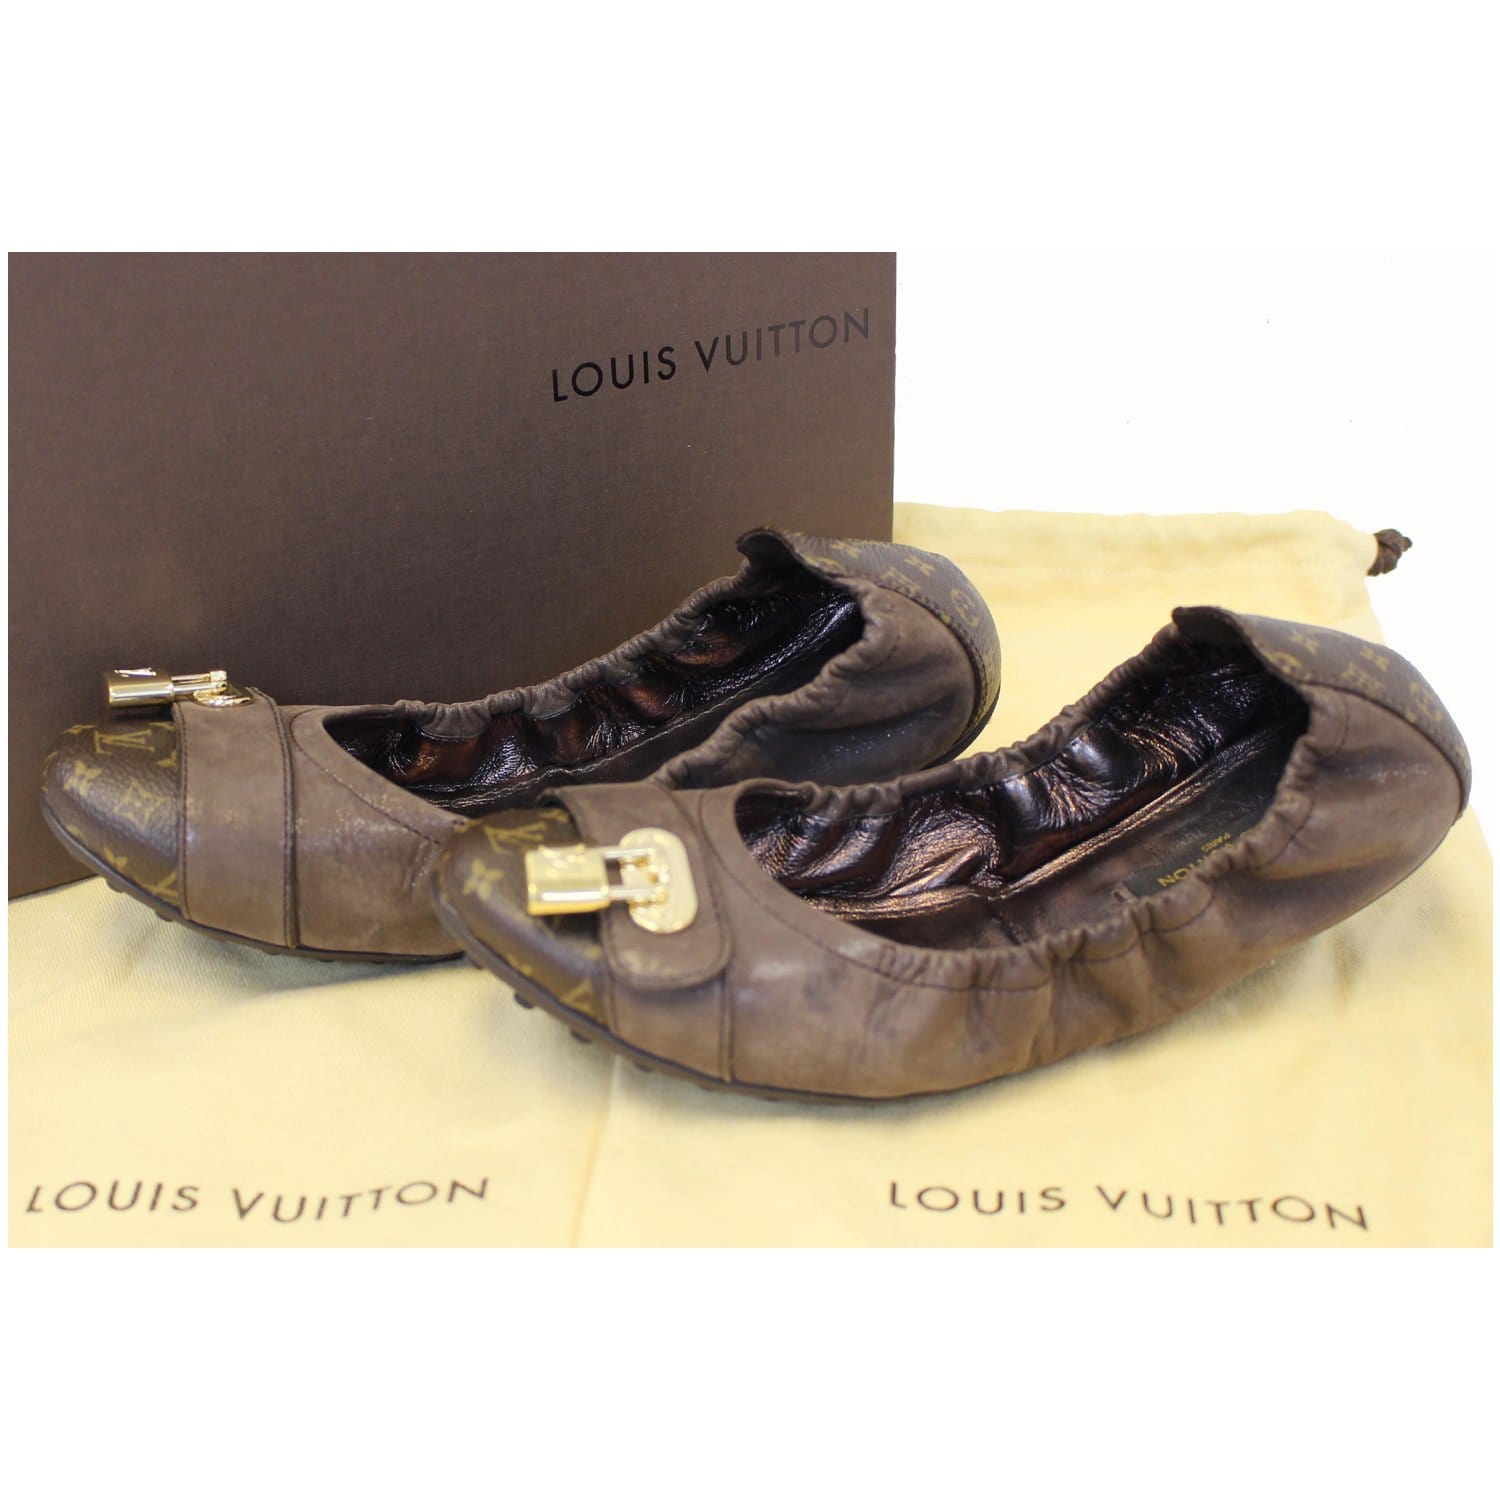 LOUIS VUITTON Lucky Ballerina Monogram Iridescent Leather Flats